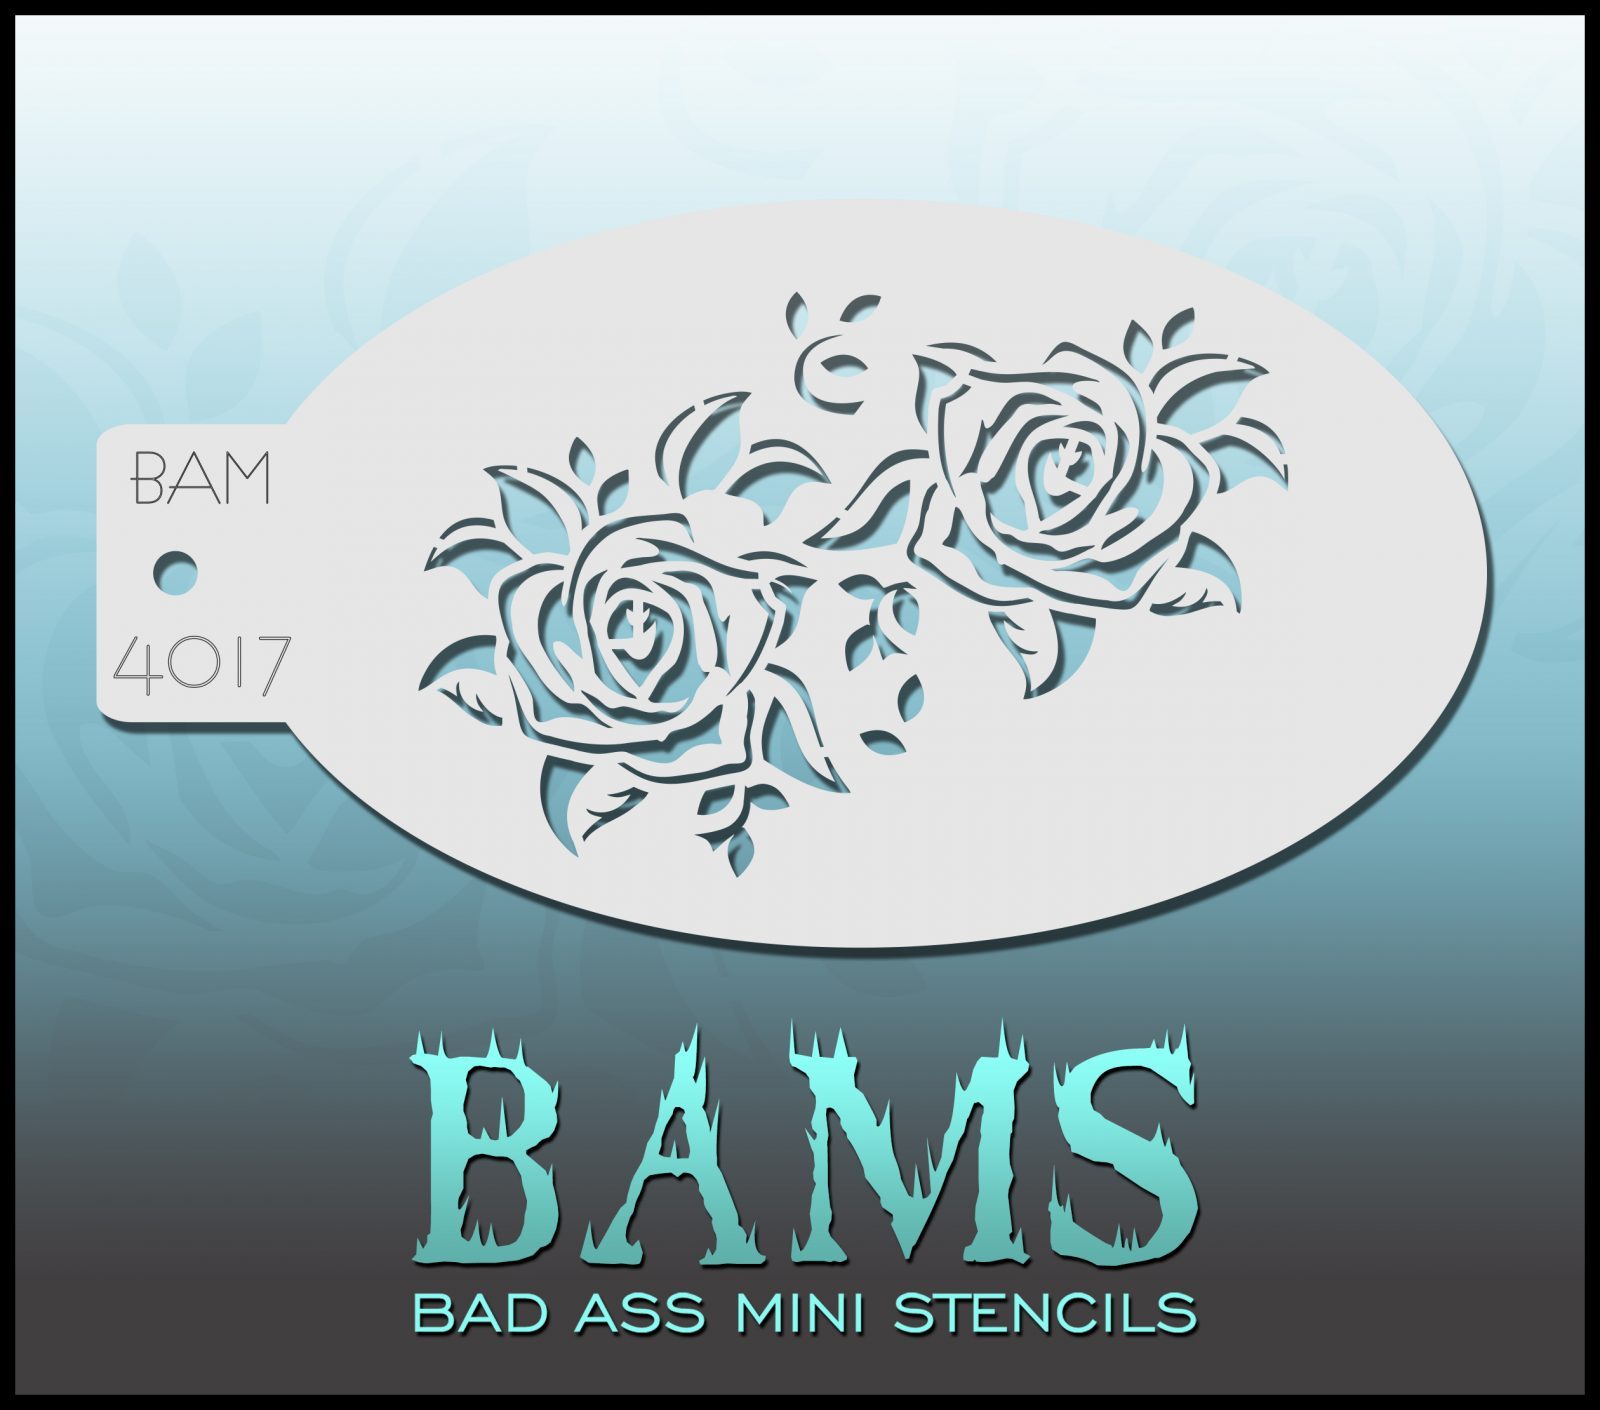 Bad Ass Stencils - BAM 4017 Roses Stencil